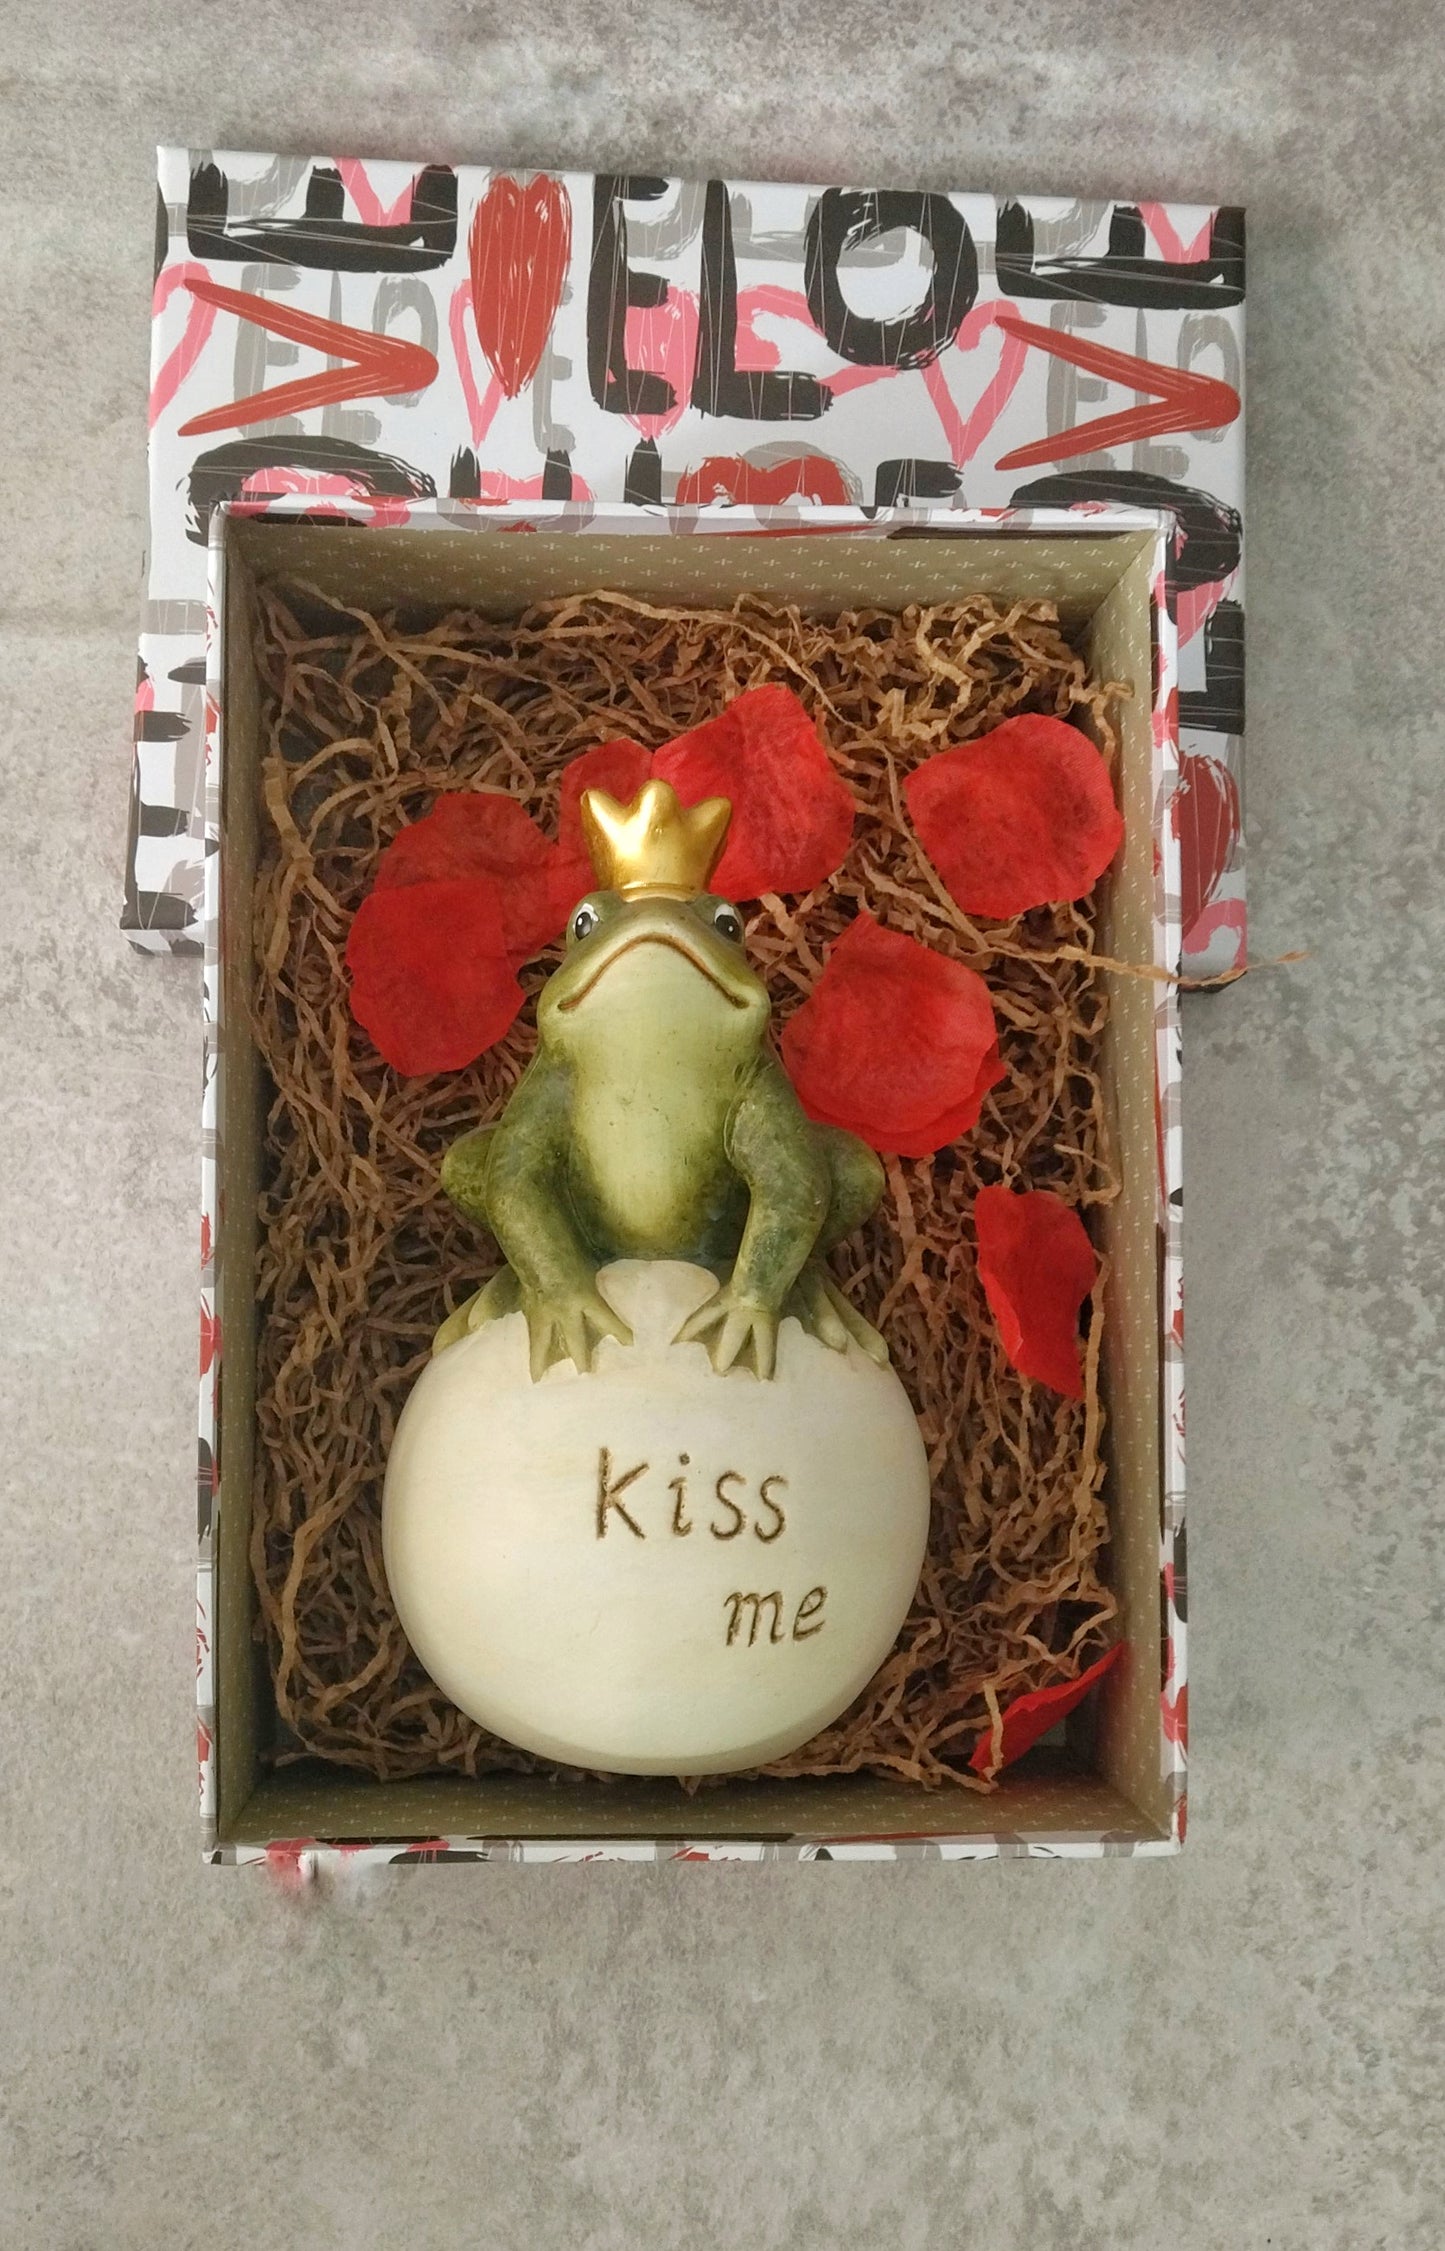 Prince Frog Ceramic Figurine, Kiss Me